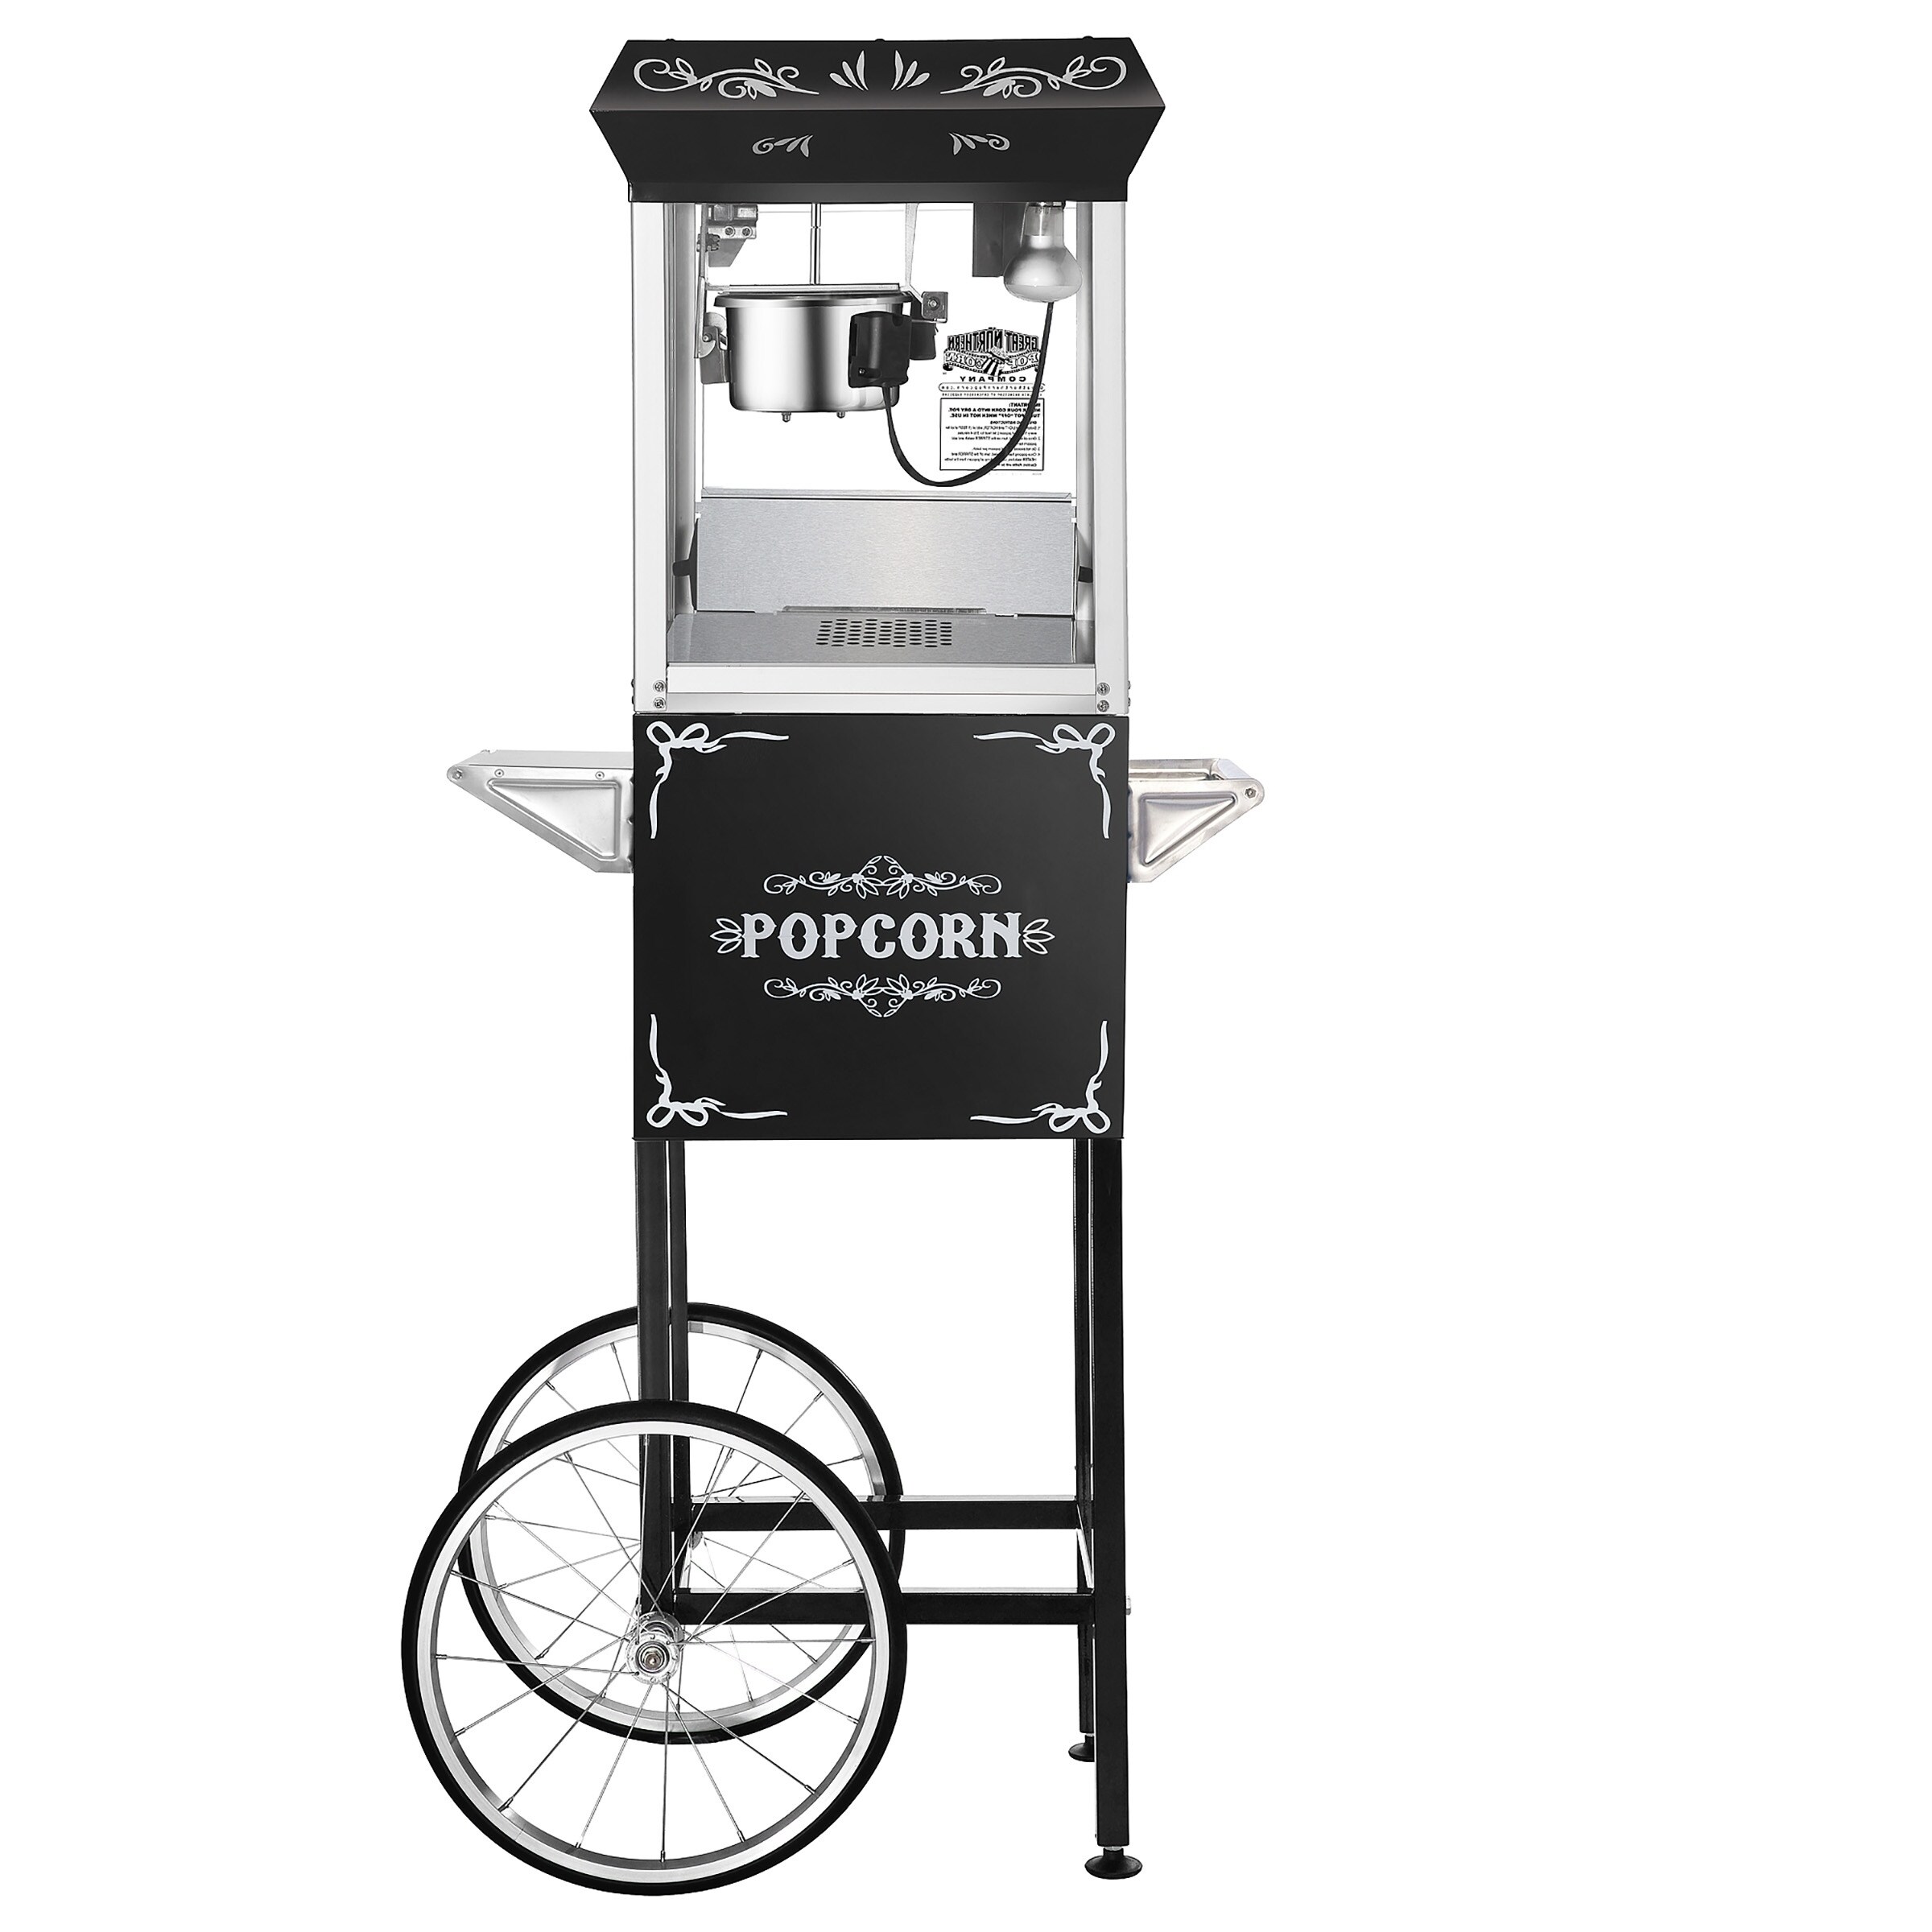 Popcorn Maker,40 Cups,Hot Air Popcorn Machine,Temperature Control With  Digital Display,Popcorn Popper Machine With 10 PACK Popcorn Buckets,Old  Fashion Popcorn Machine Movie Theater Style